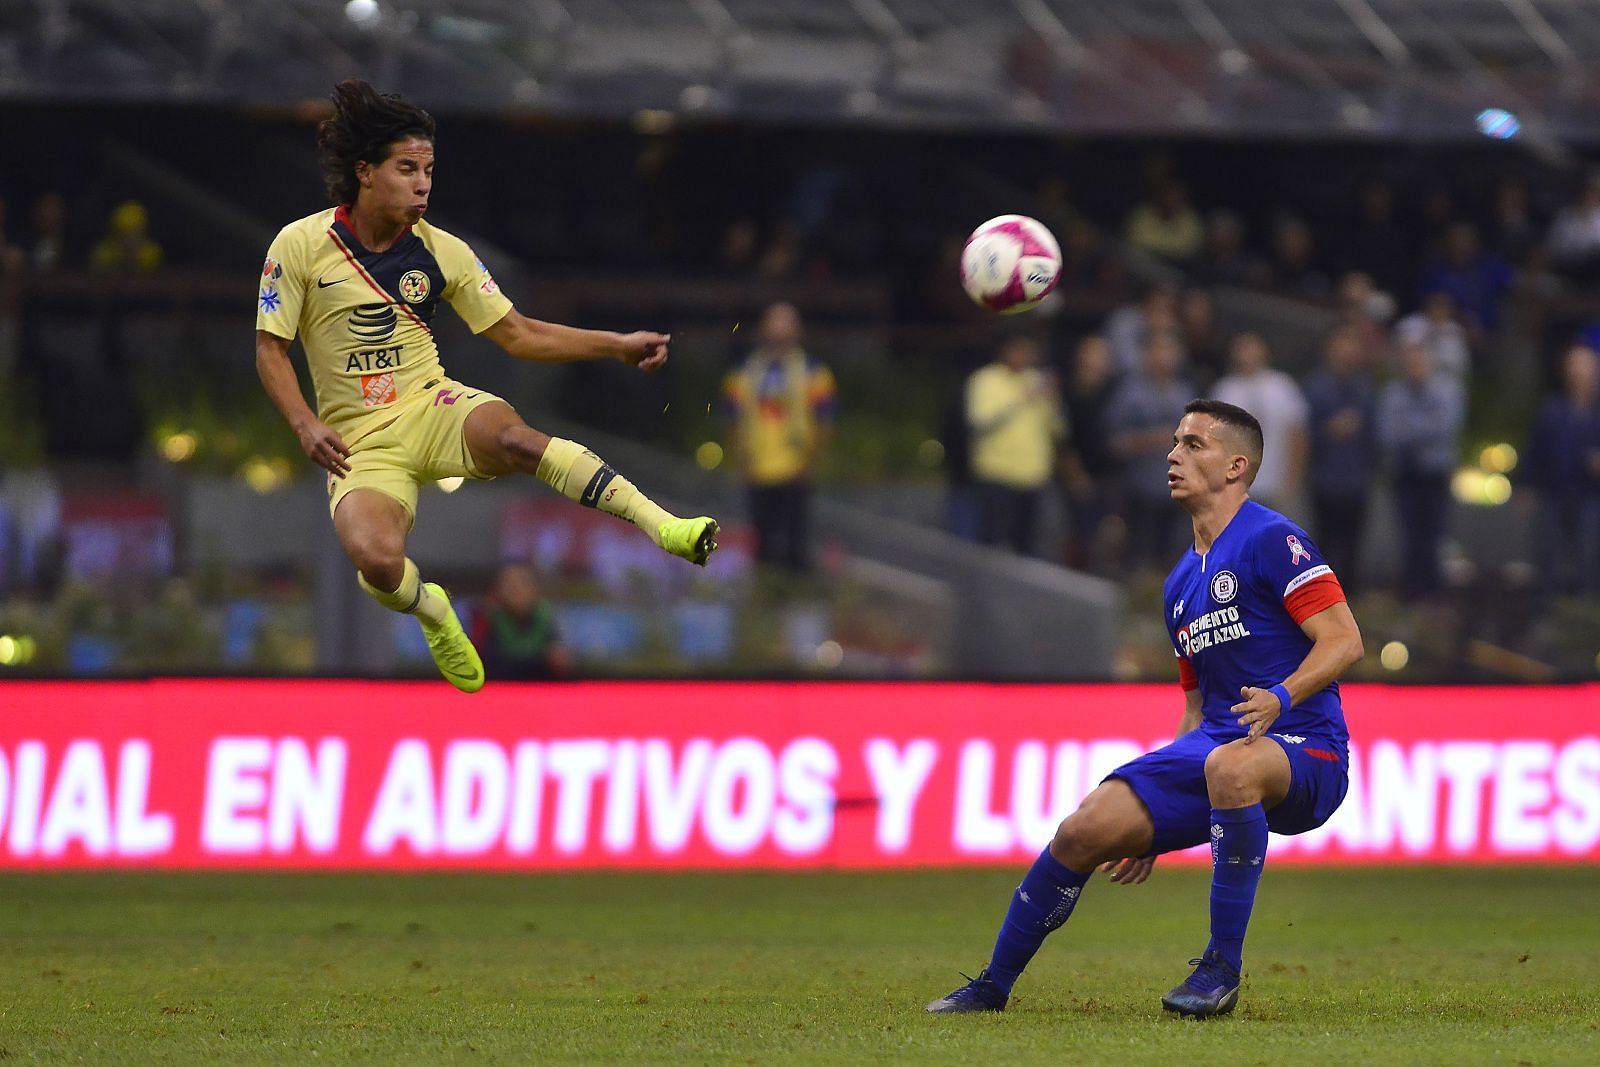 Cruz Azul and Club America meet in a crucial Copa por Mexico game on Tuesday